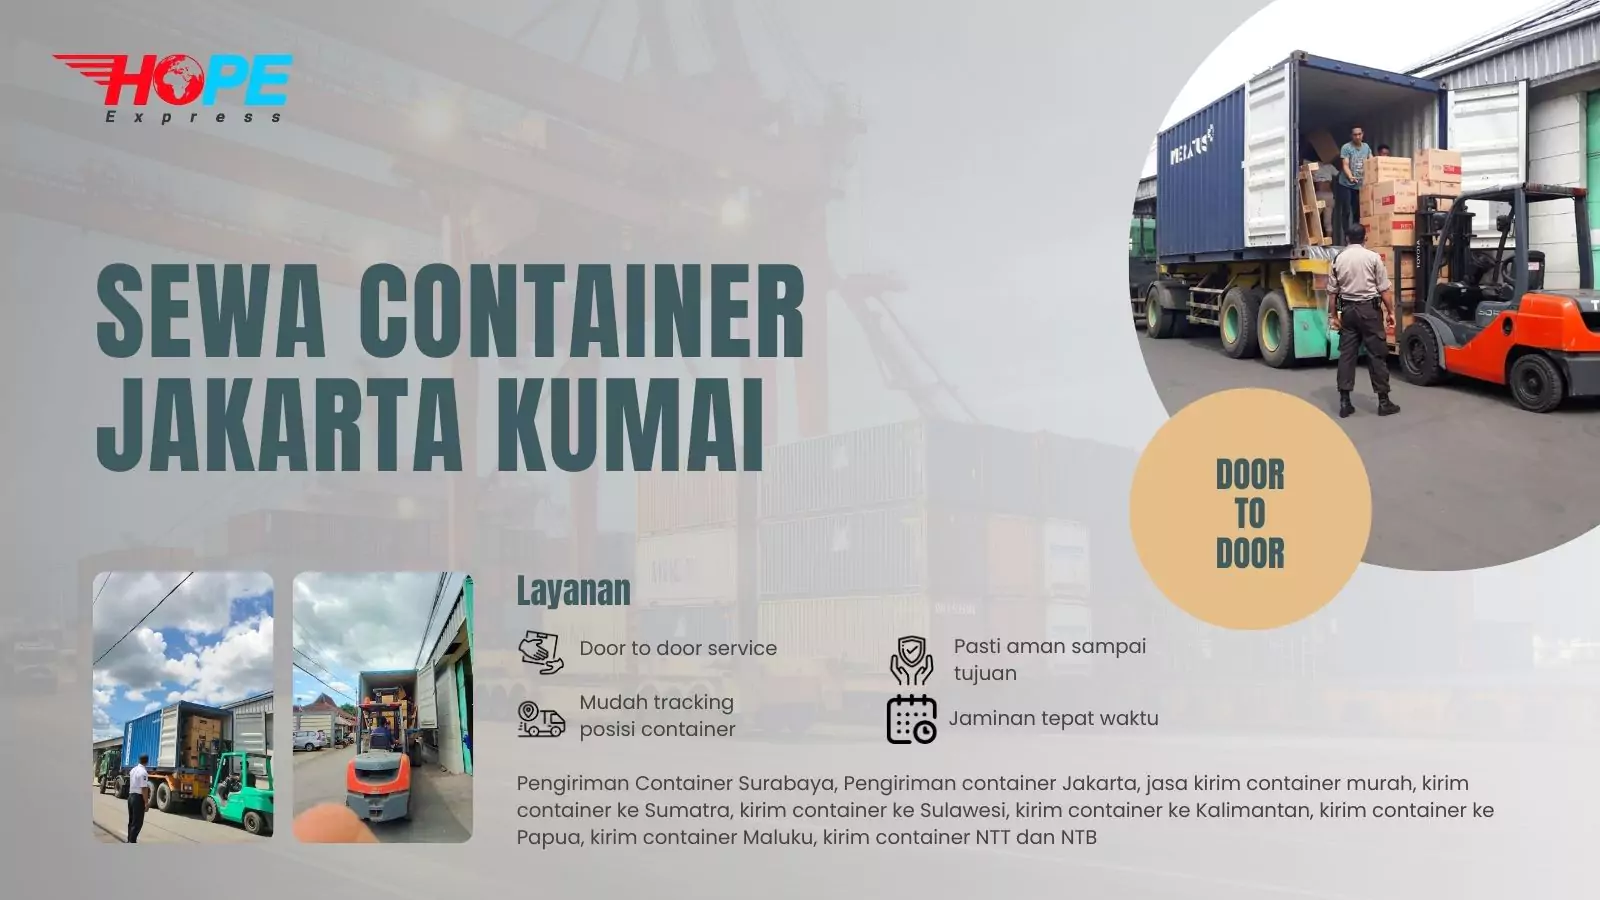 Sewa Container Jakarta Kumai